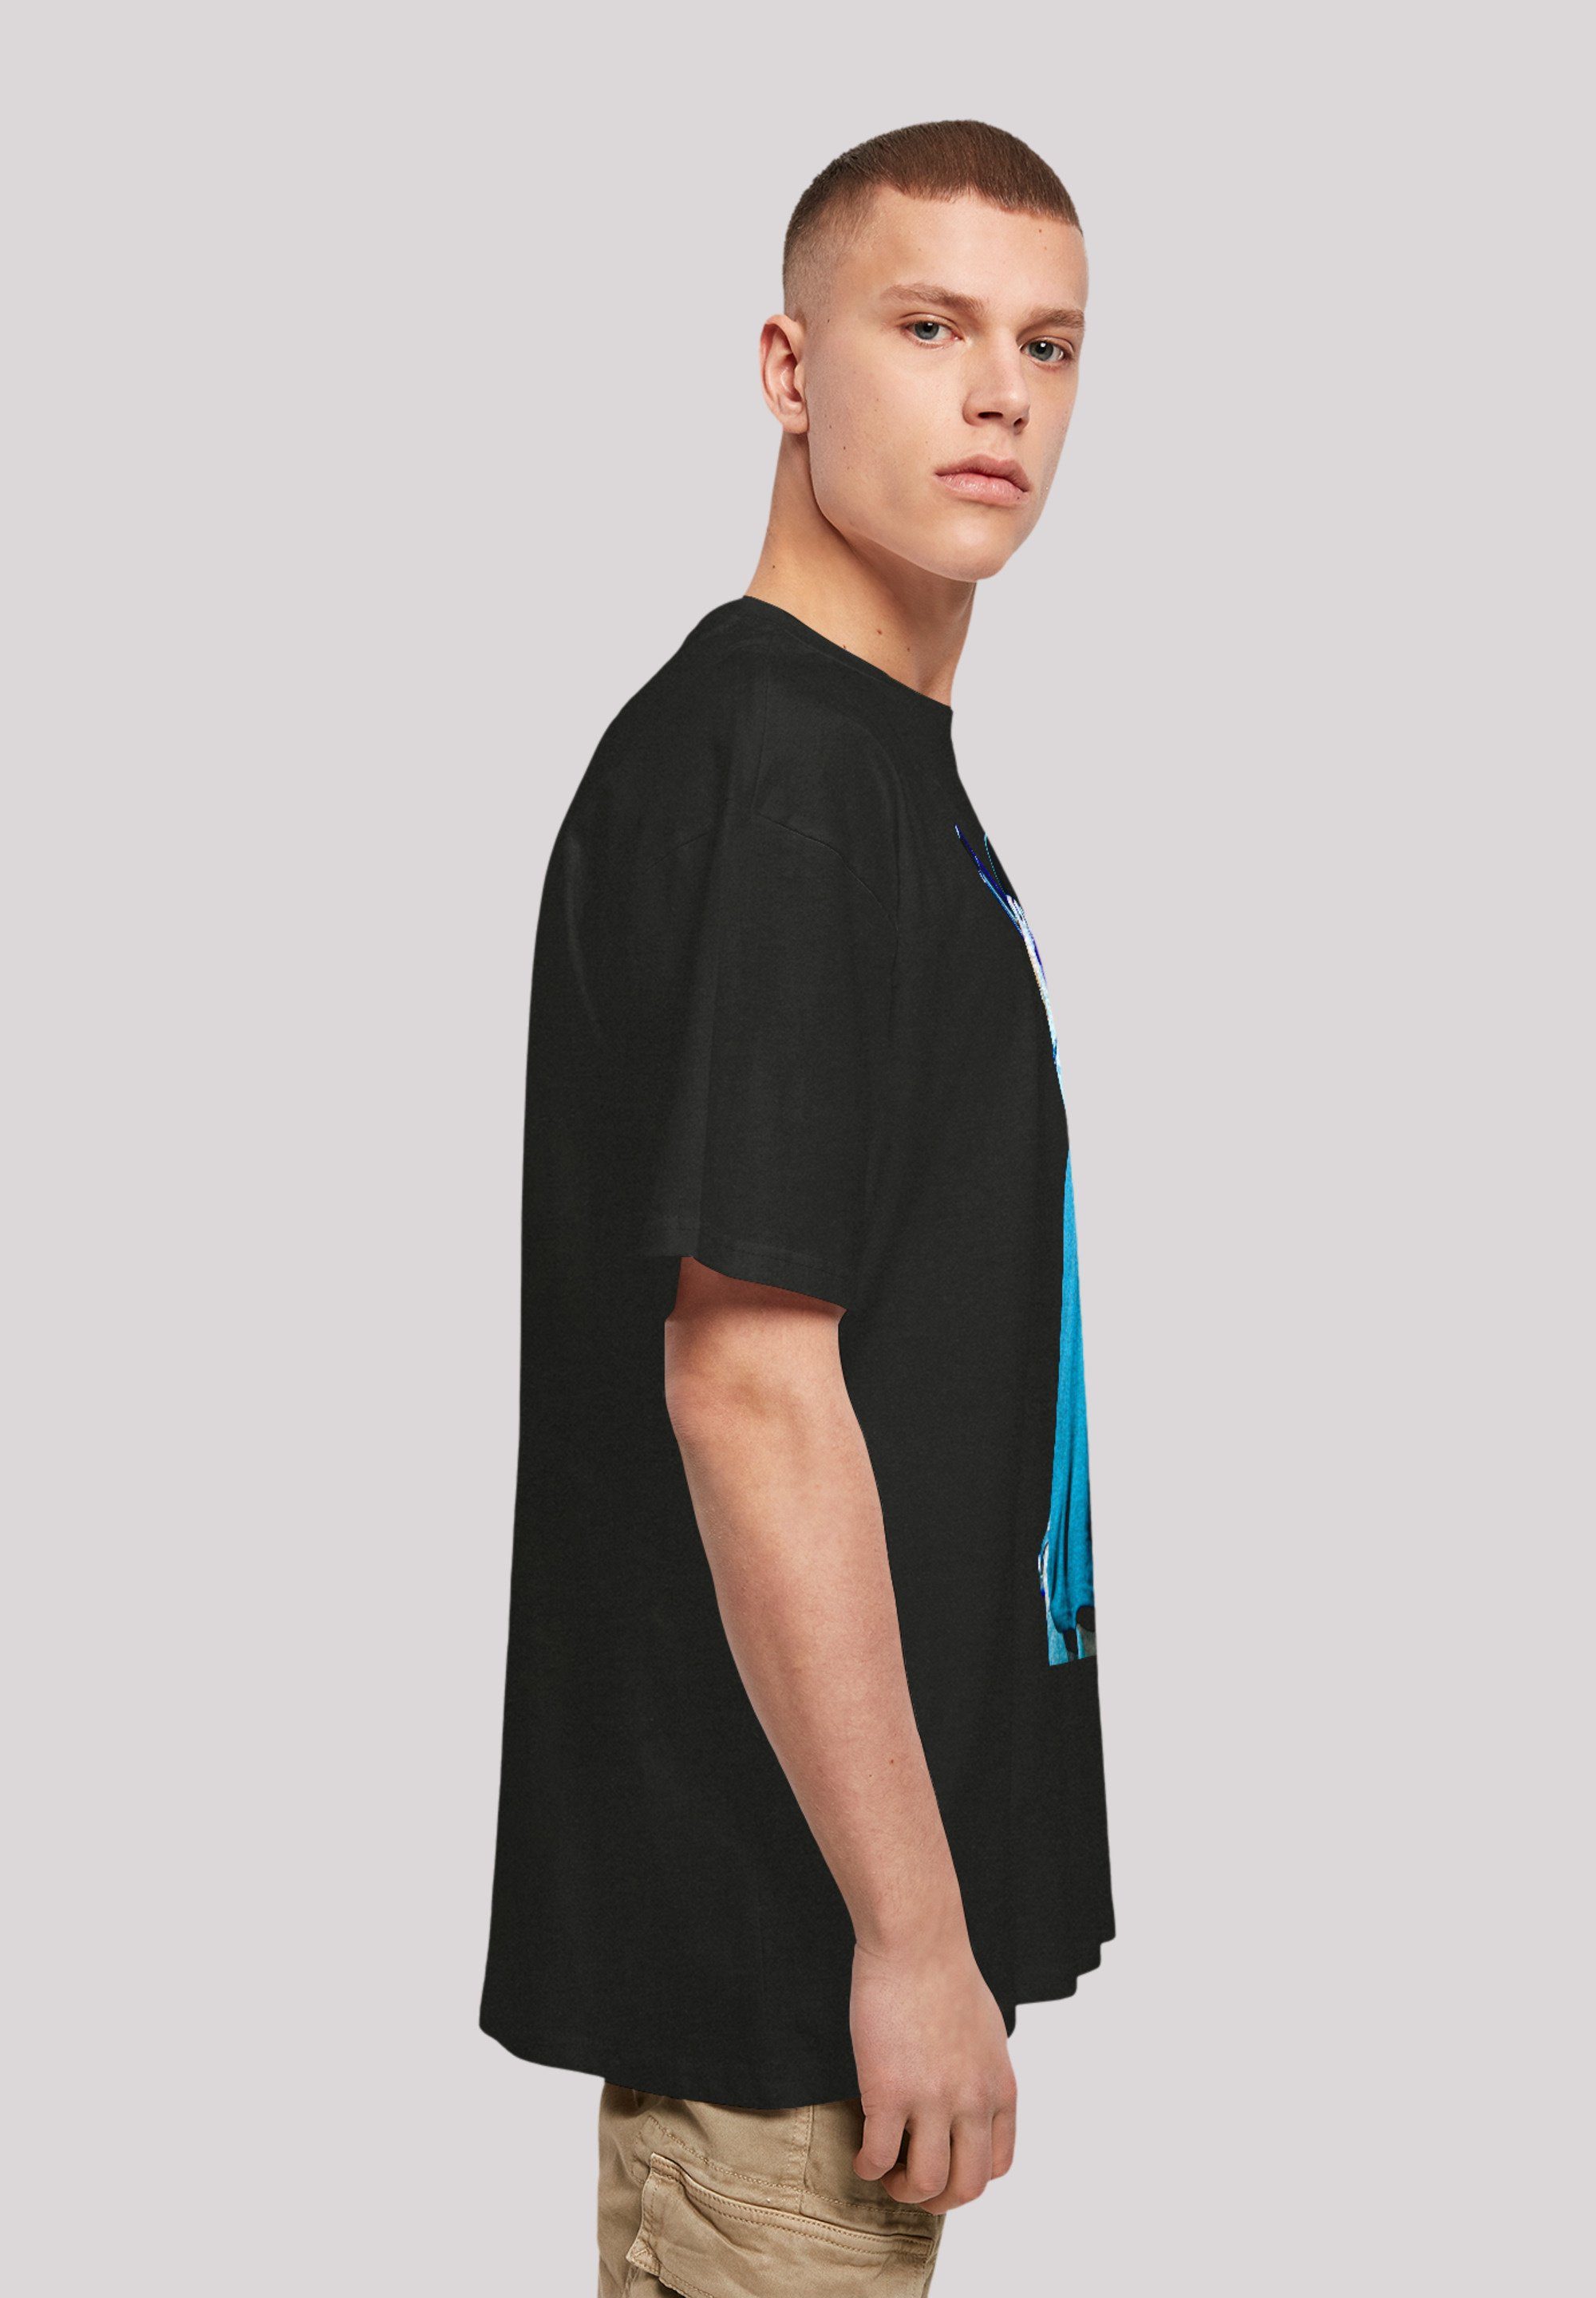 Hip Eminem F4NT4STIC Musik Music T-Shirt Qualität, Premium Pose Mic schwarz Hop Rap